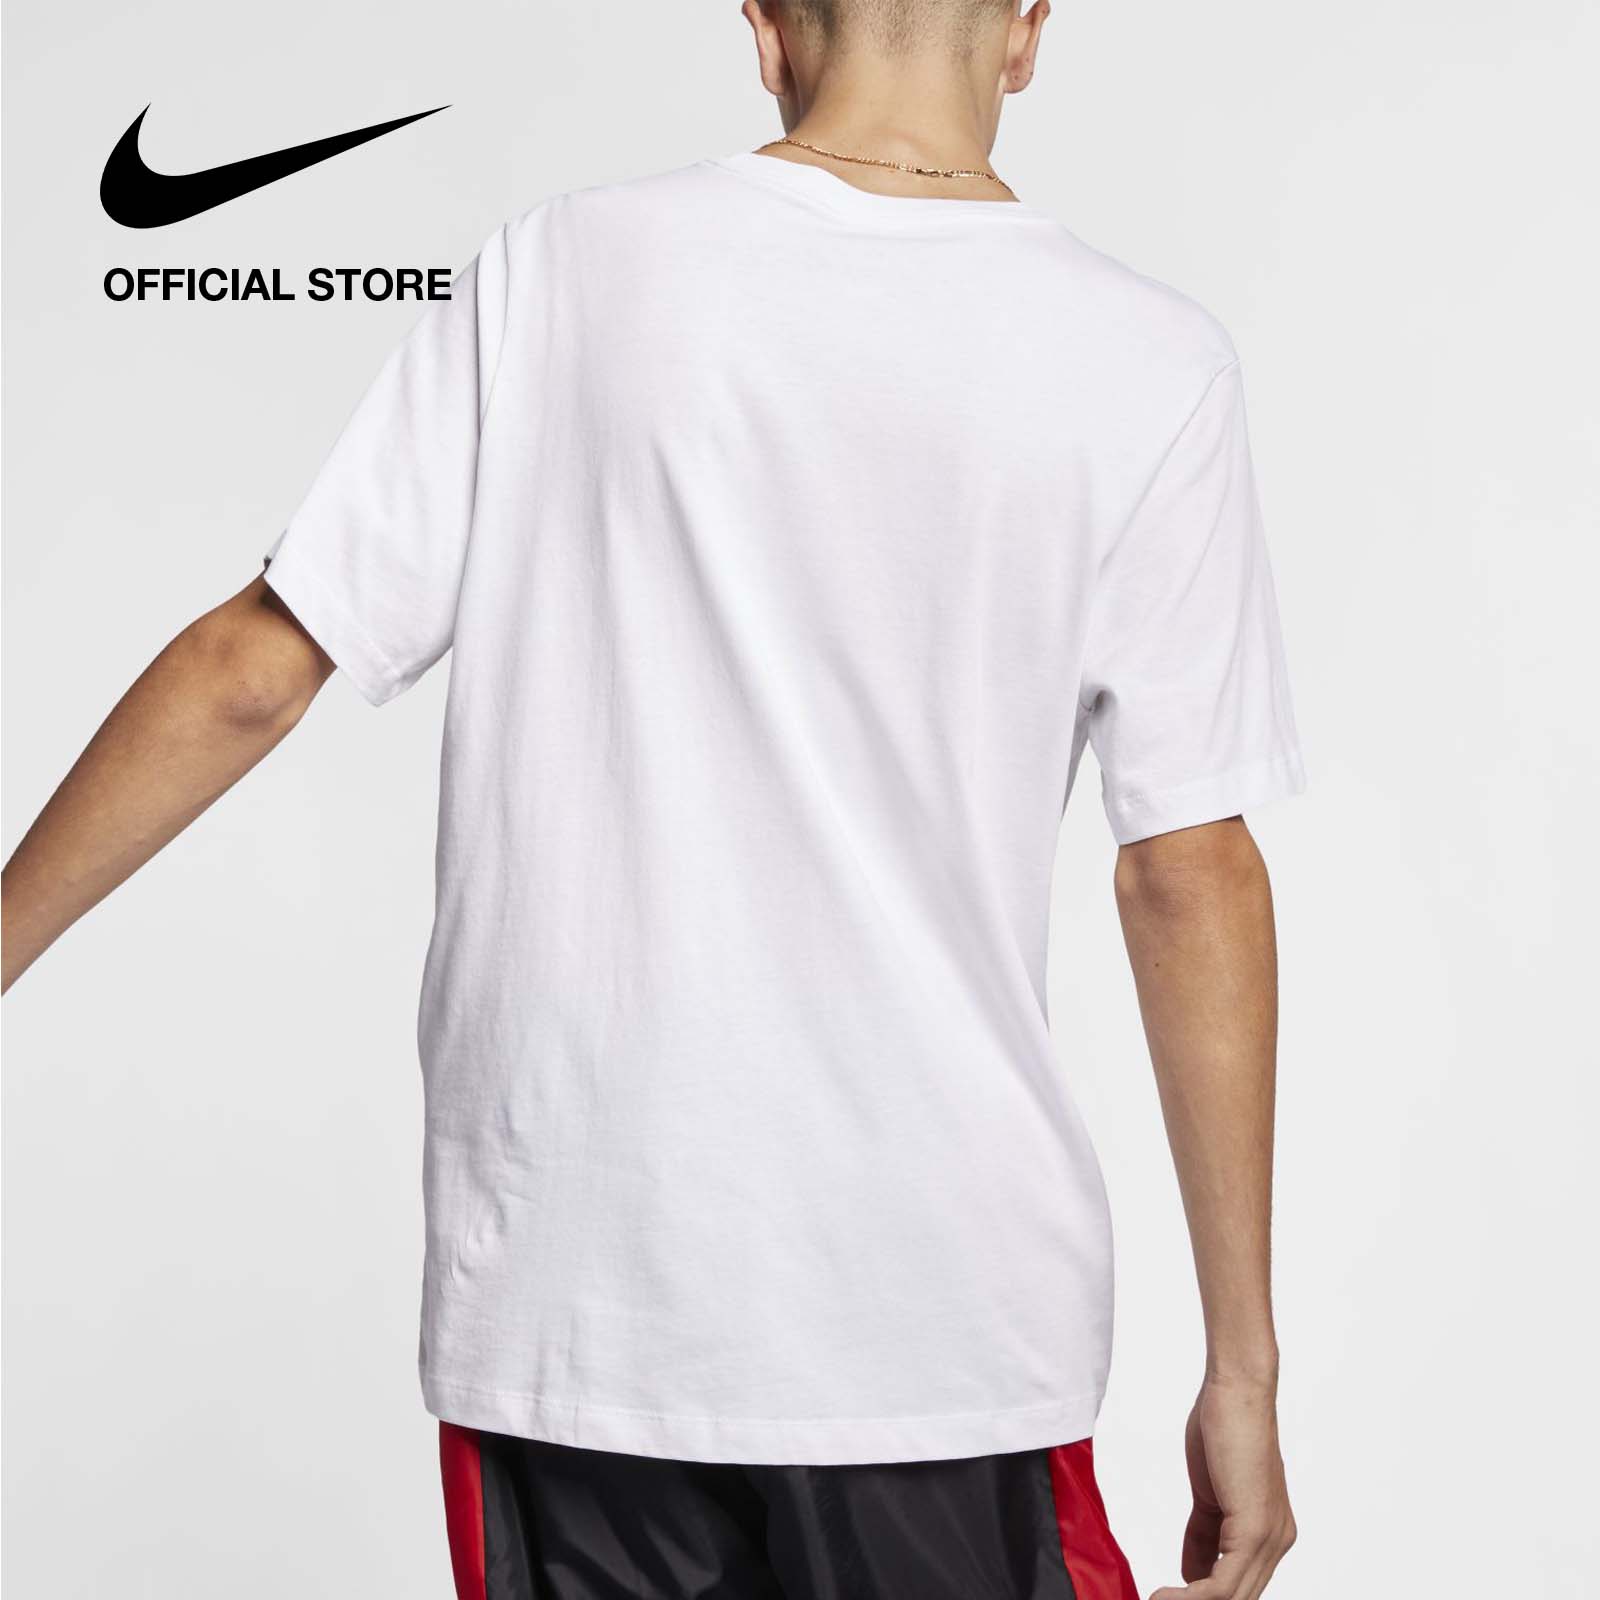 Nike Men's Sportswear T-Shirt - White ไนกี้ เสื้อยืดผู้ชาย ดรายฟิต - สีขาว